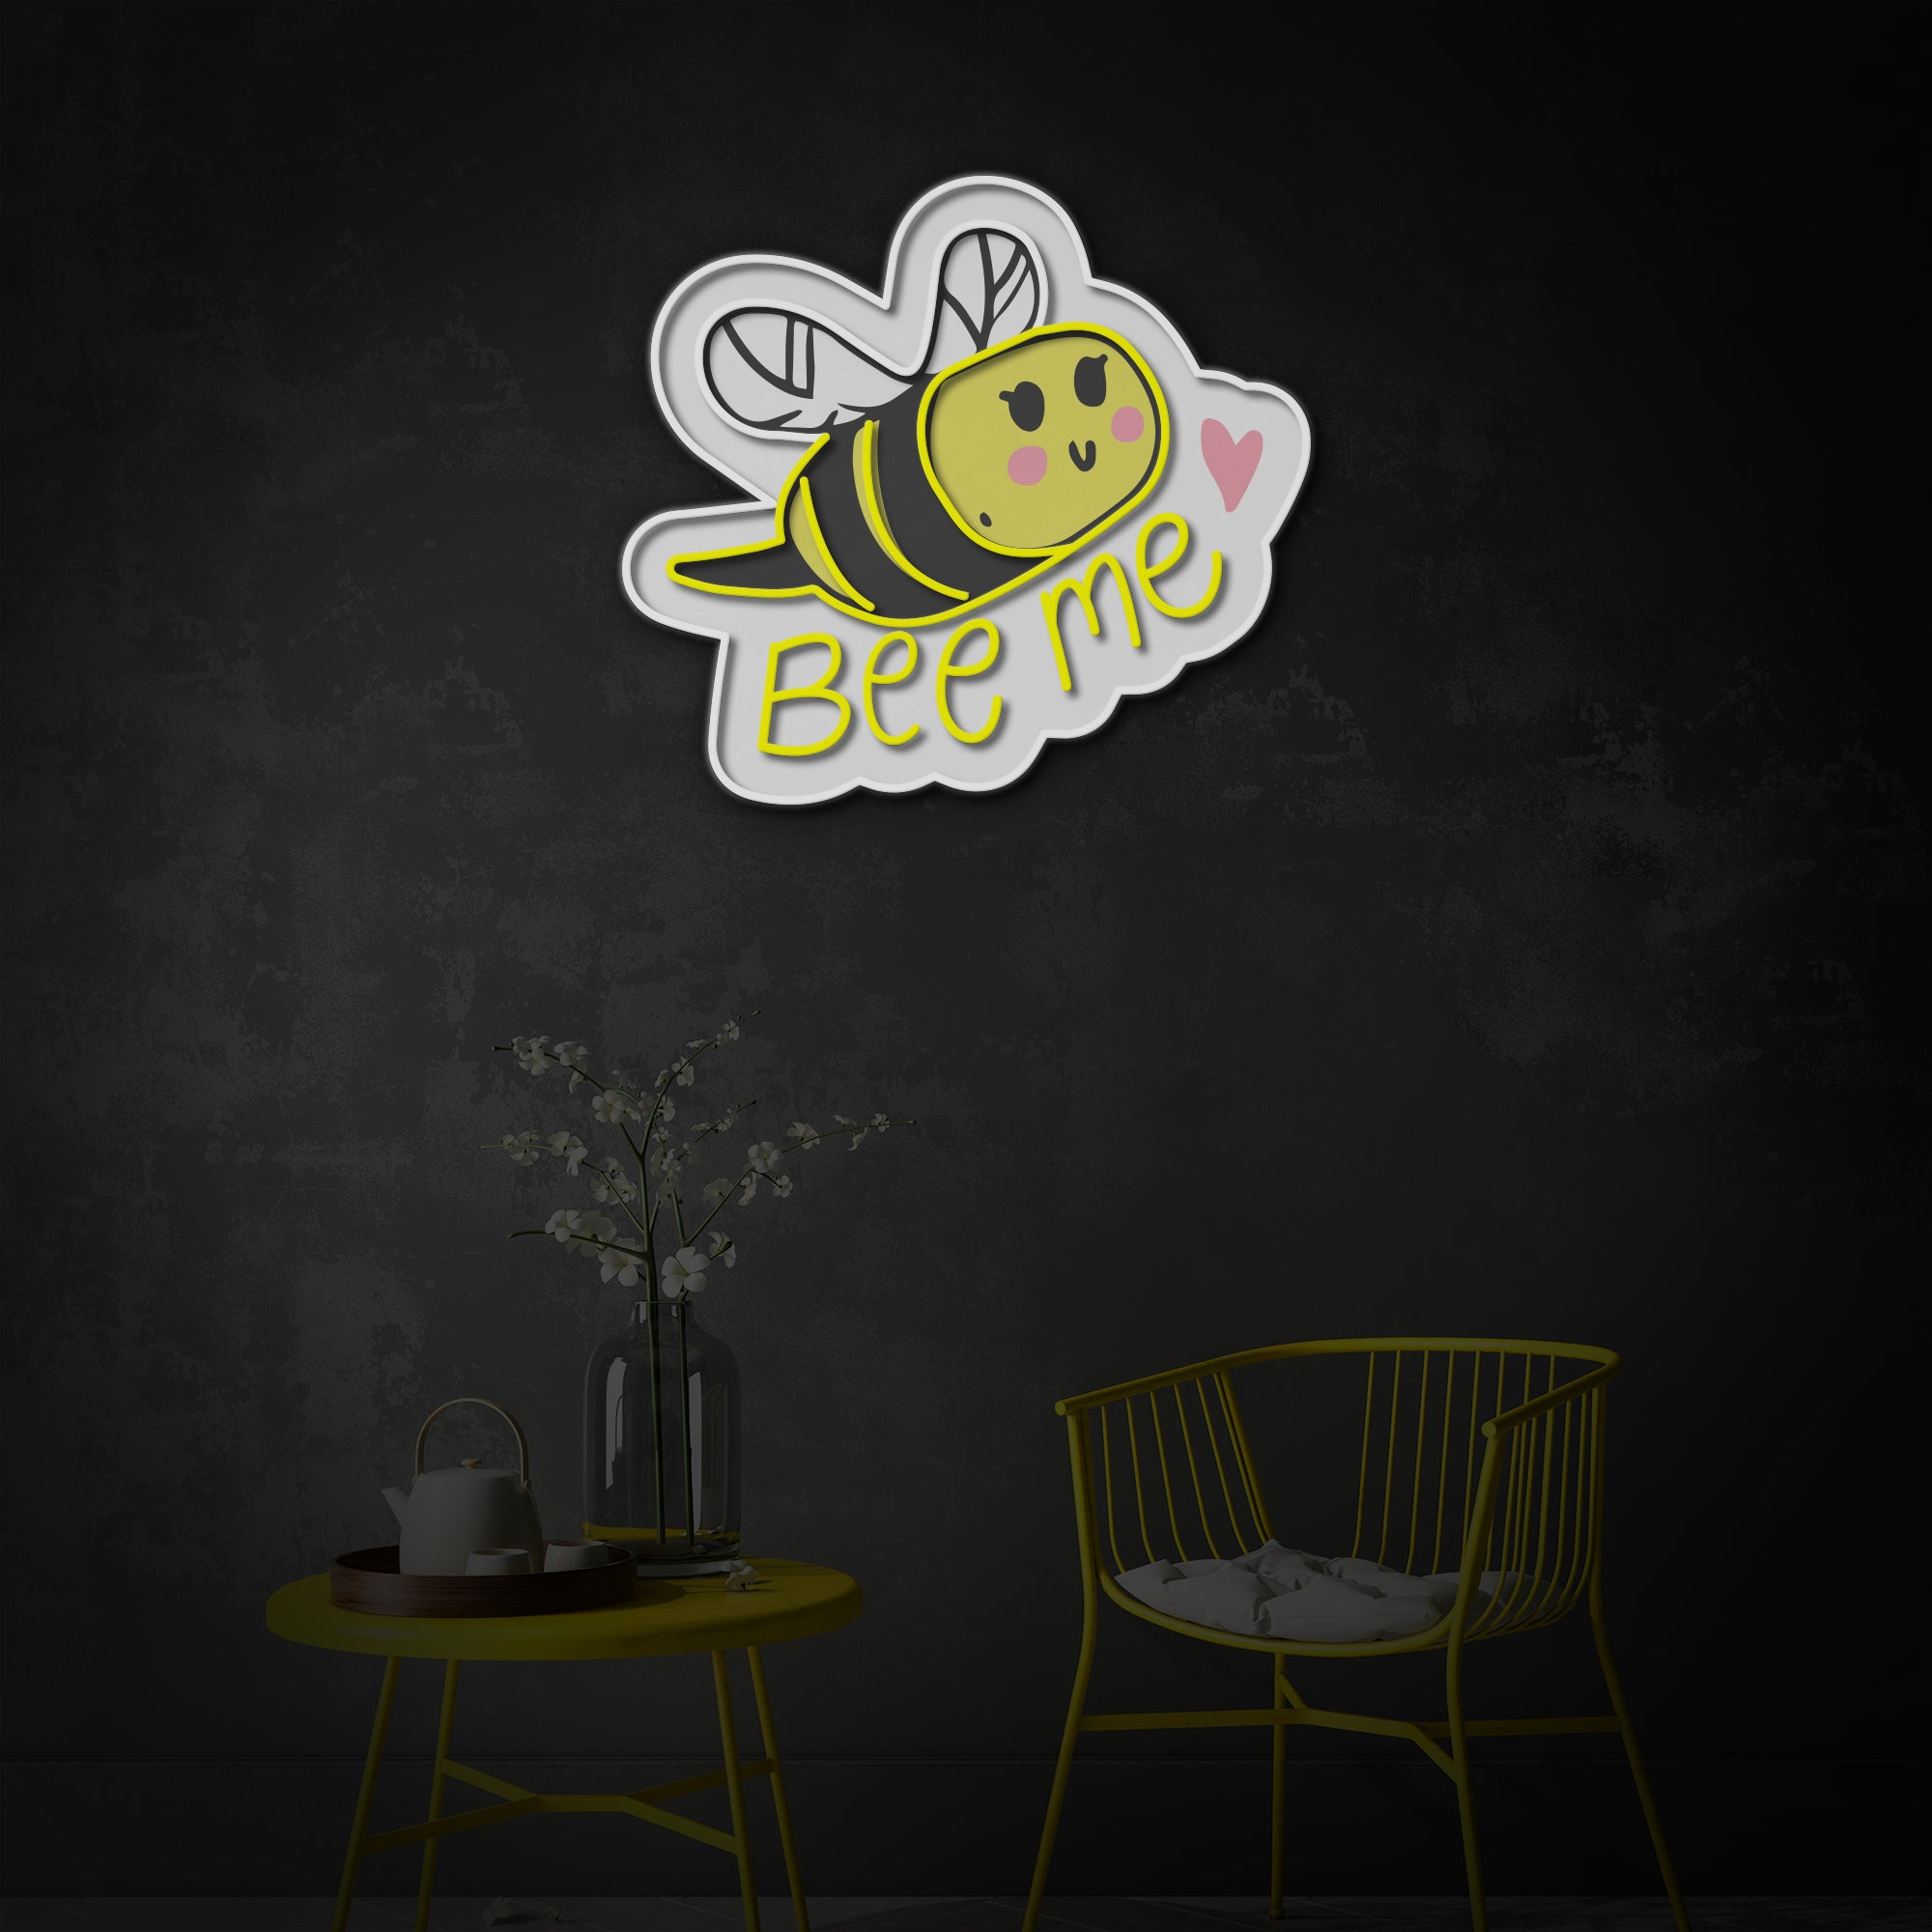 "Bee Me" LED Neon Sign 2.0, Luminous UV Printed